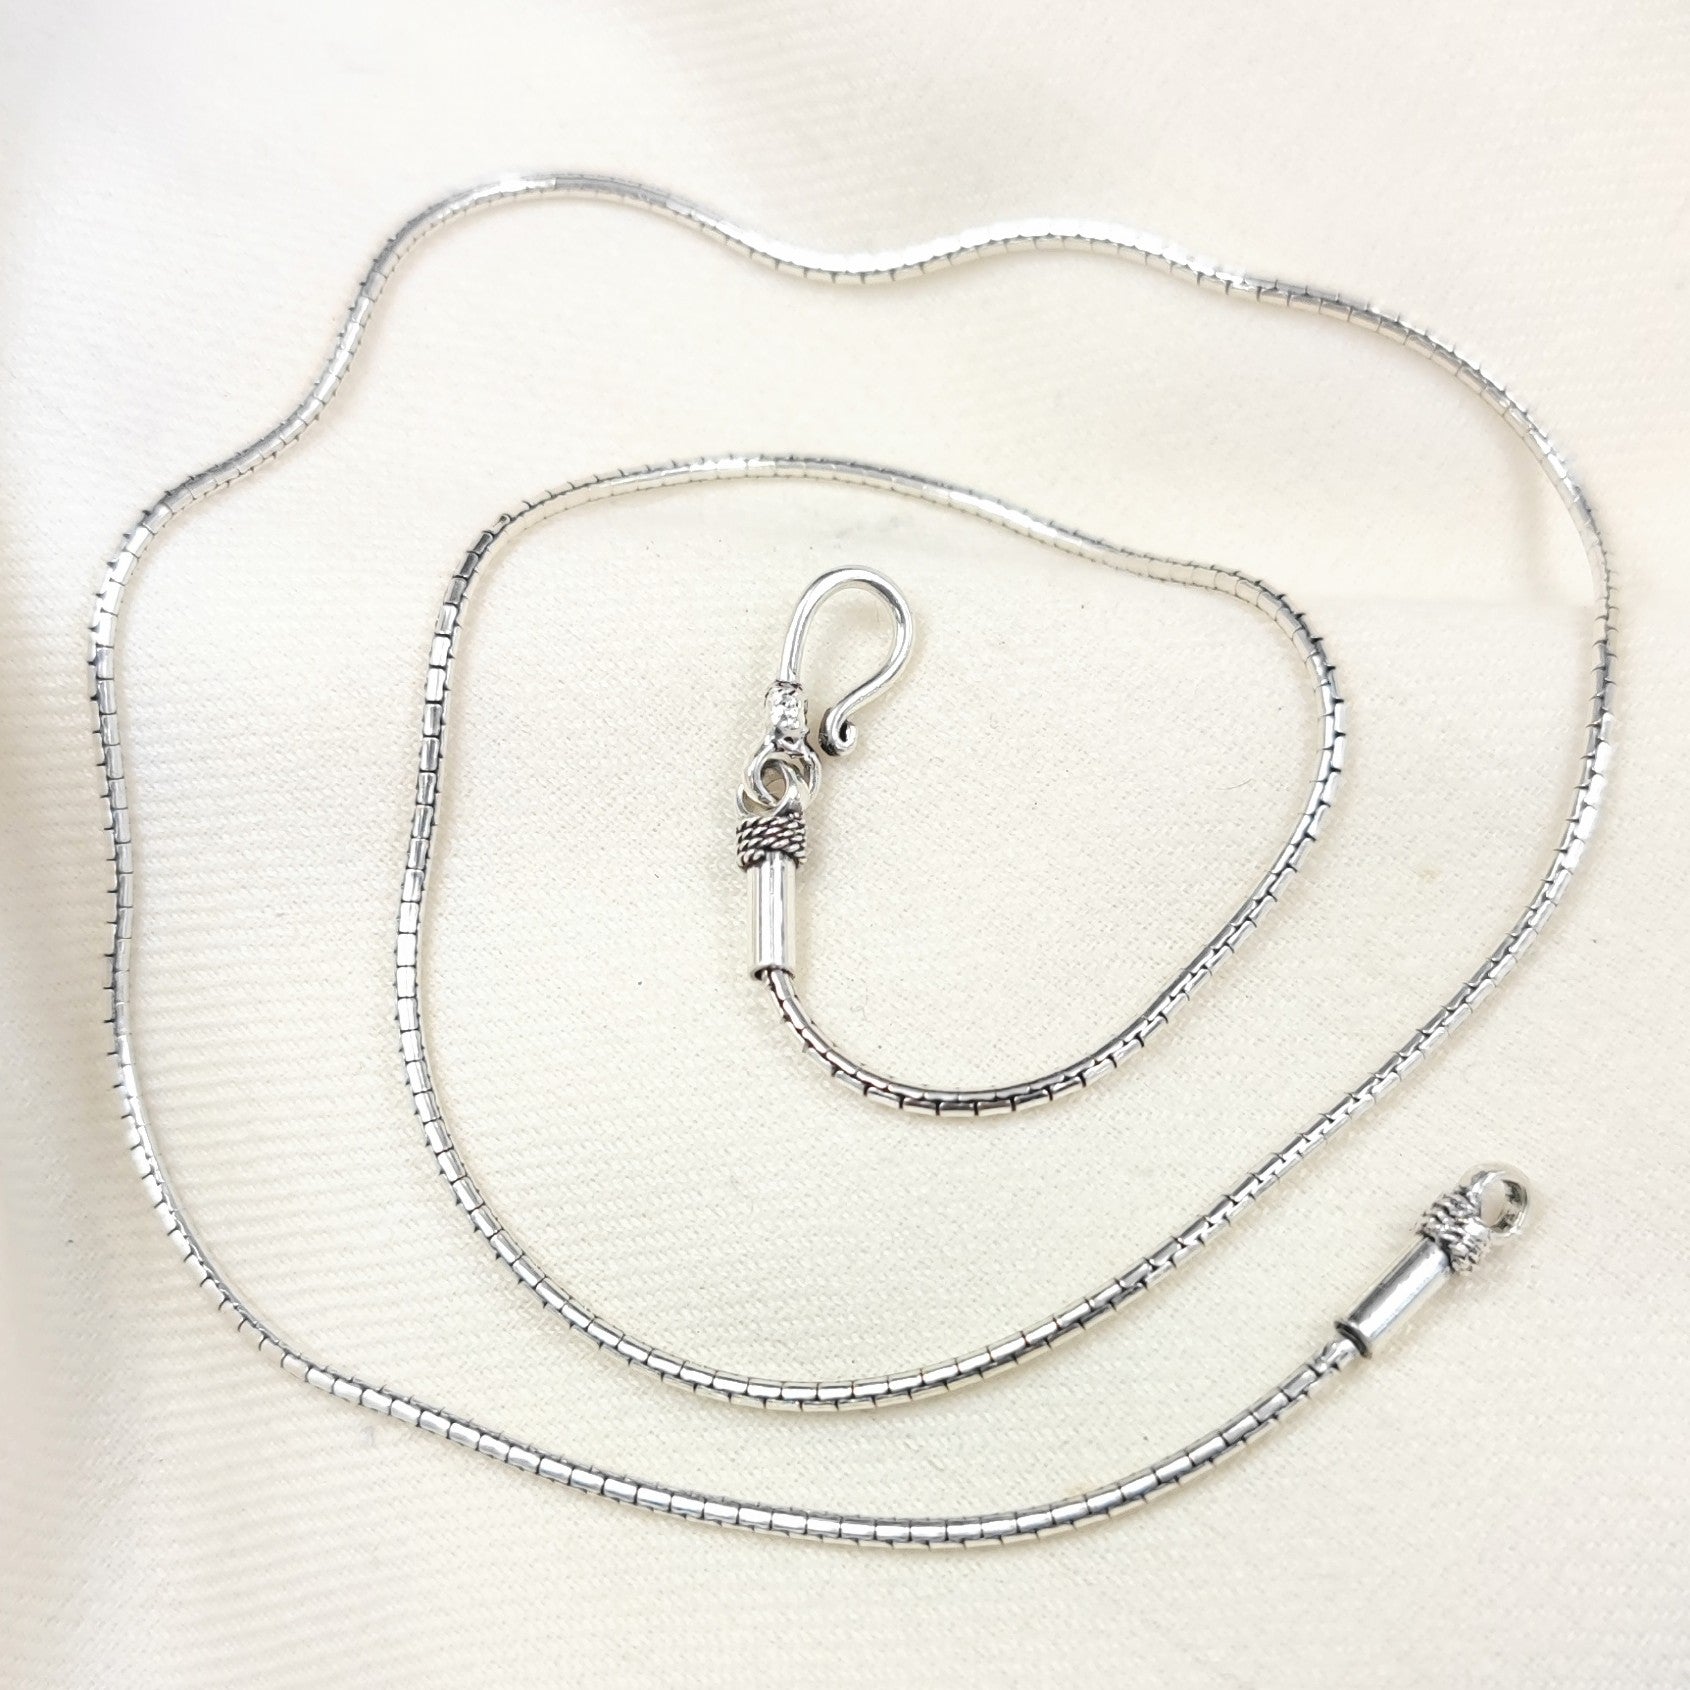 Silver Jewelry Chain by Jauhri 92.5 Silver - Reptilian Chain 24 Inch